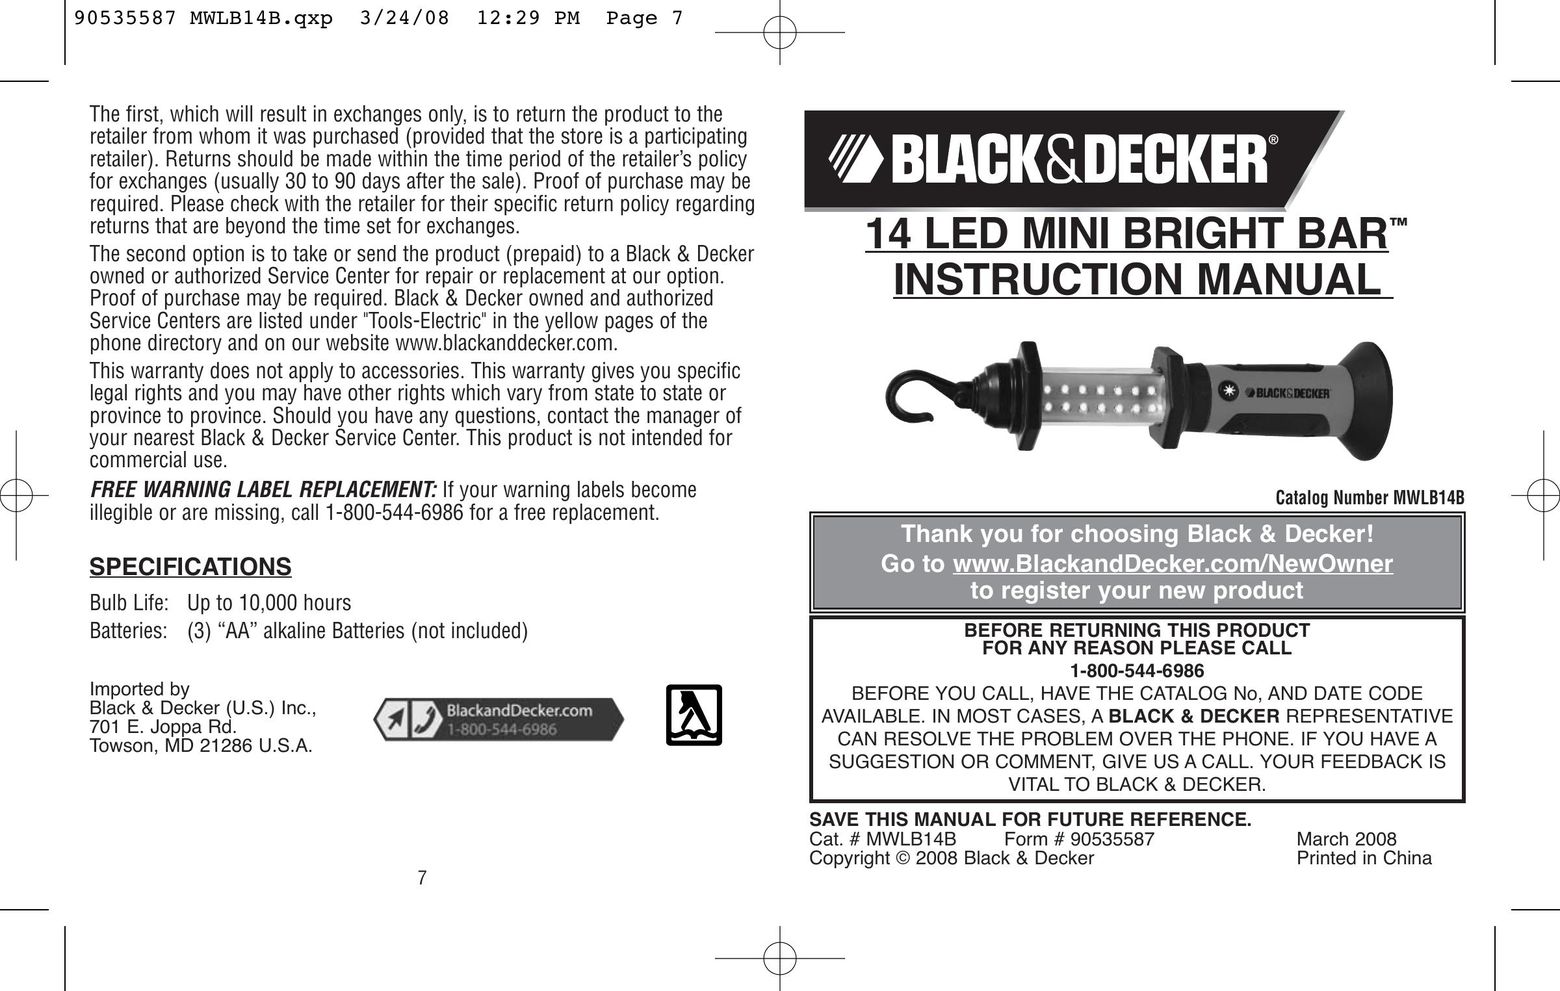 Black & Decker MWLB14B Indoor Furnishings User Manual